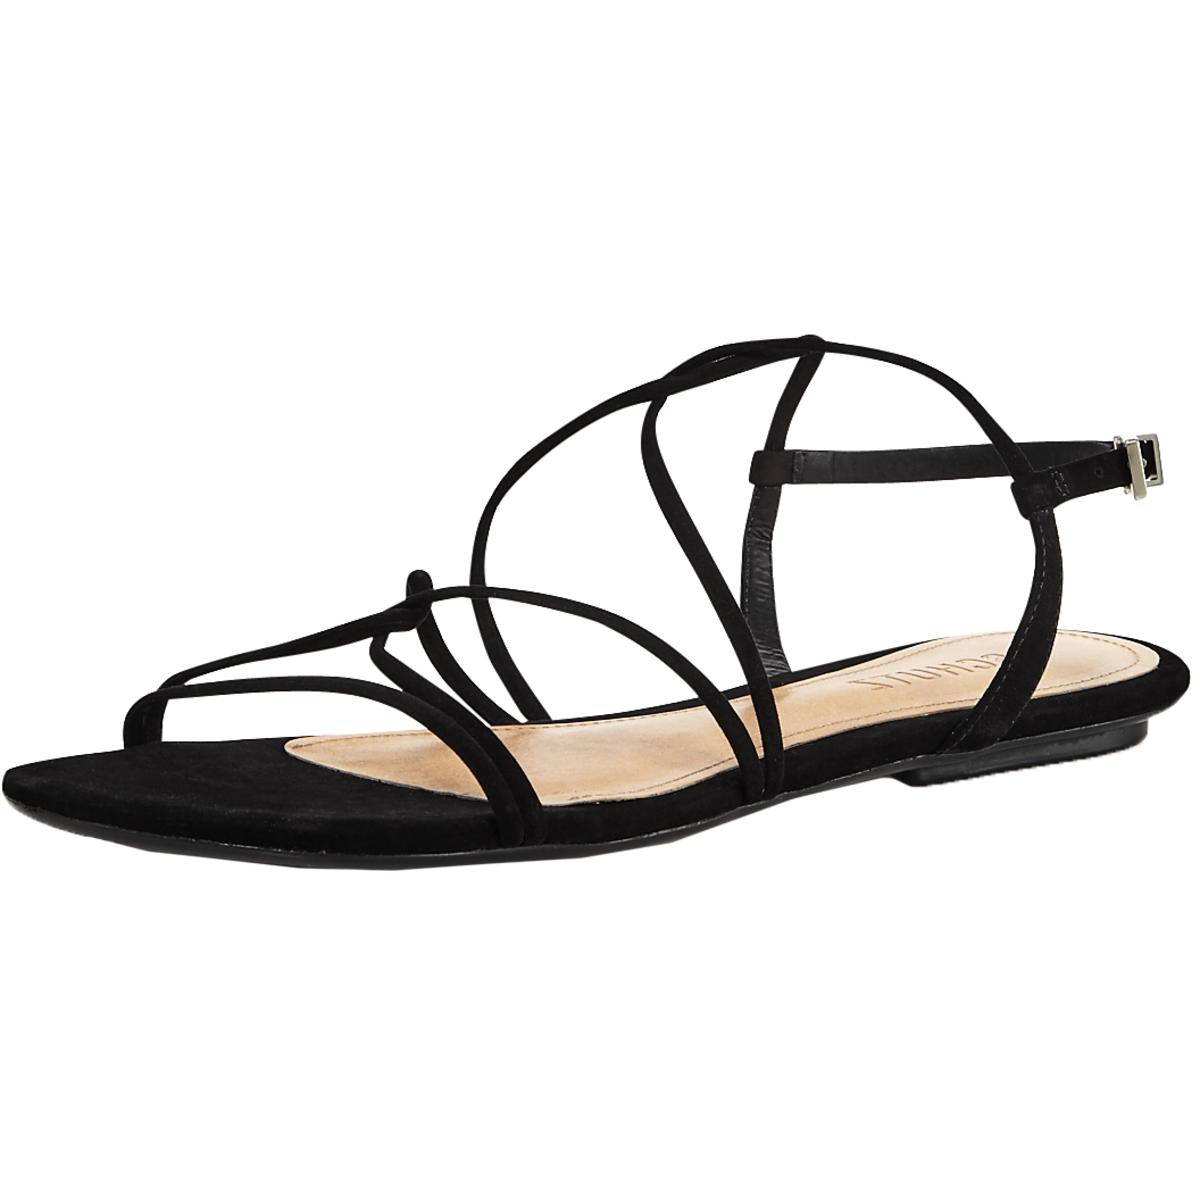 Schutz Womens Sandalia Black Flat Dress Sandals Shoes 7.5 Medium (B,M ...